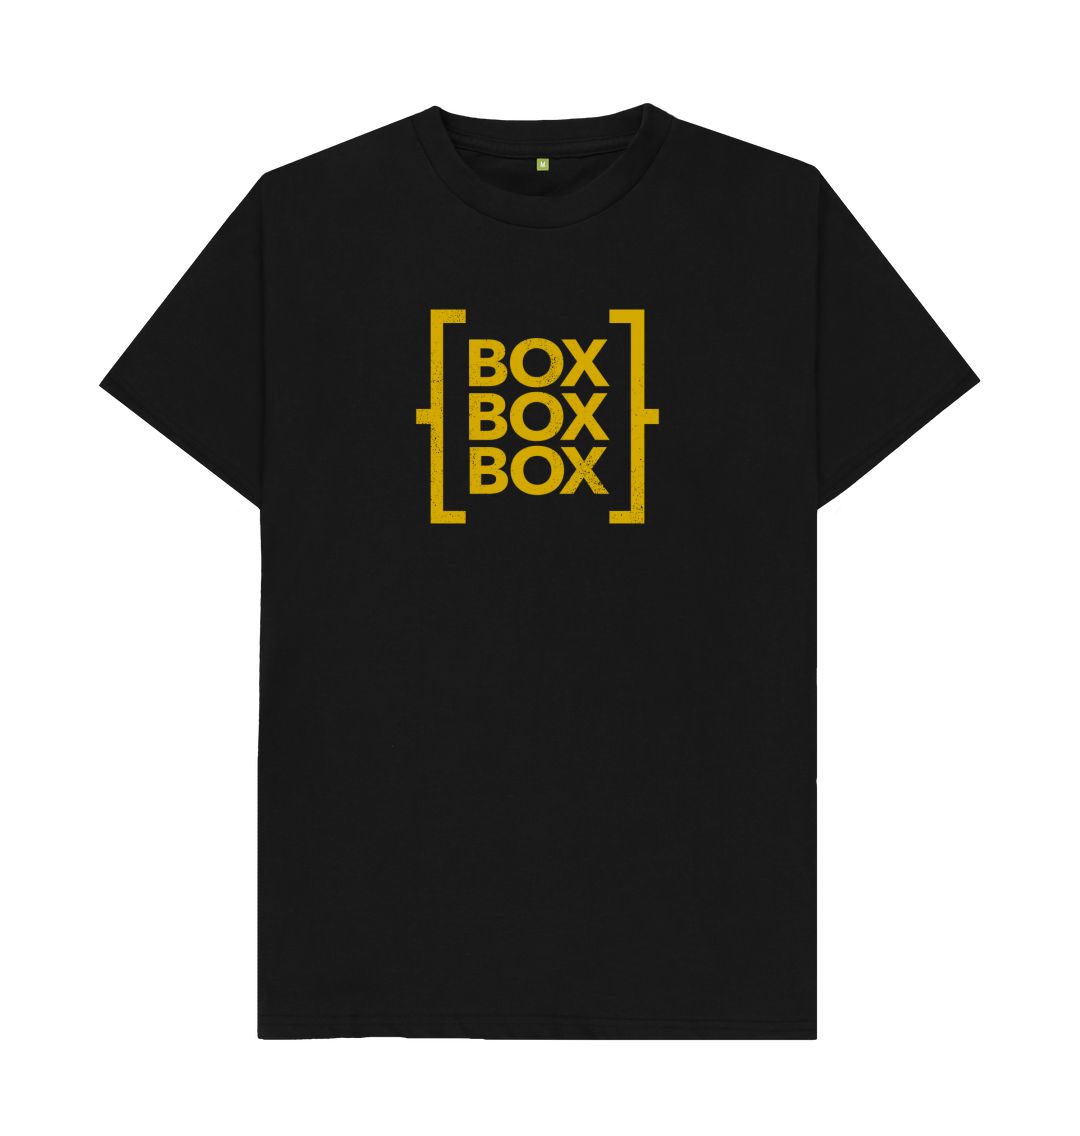 Black Box Box Box - The T-Shirt